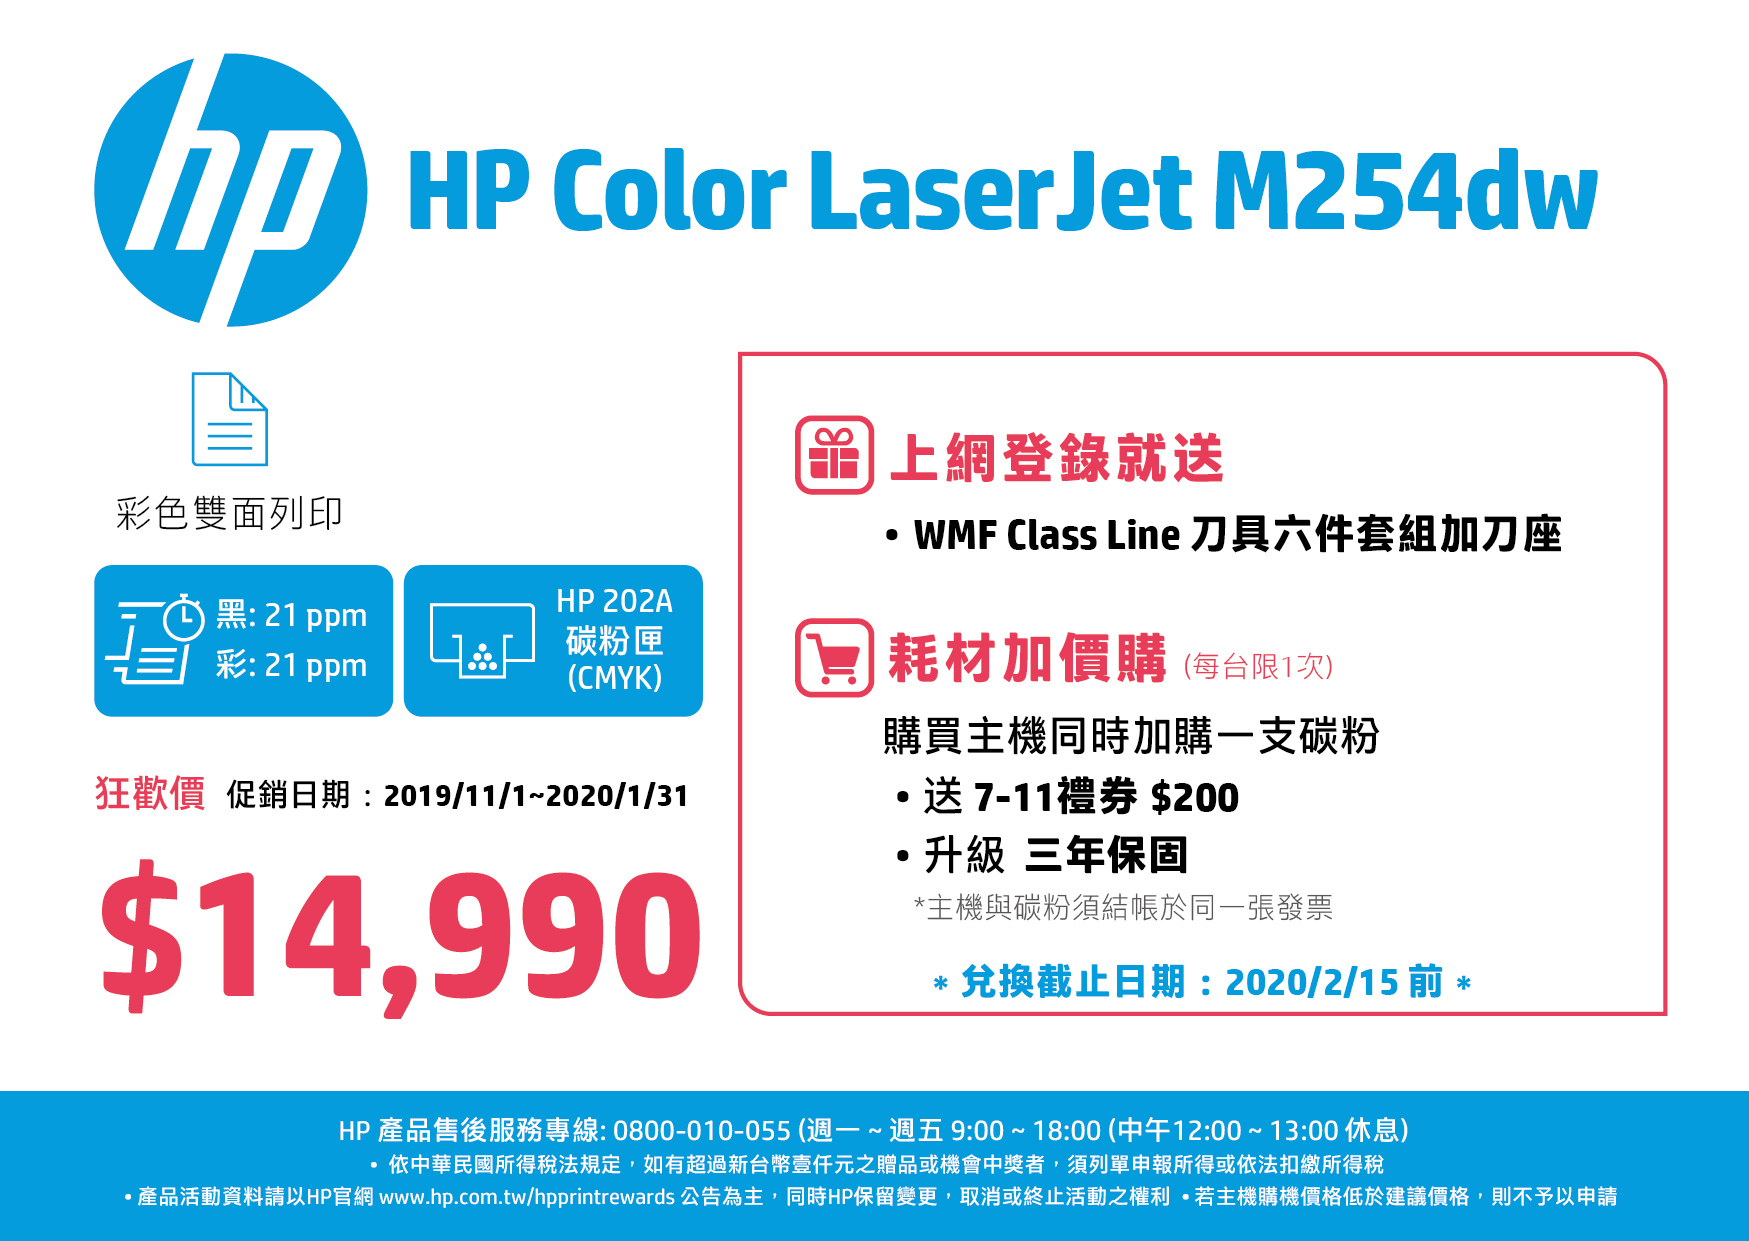 HP Color LaserJet Pro M254dw 個人彩色雷射印表機